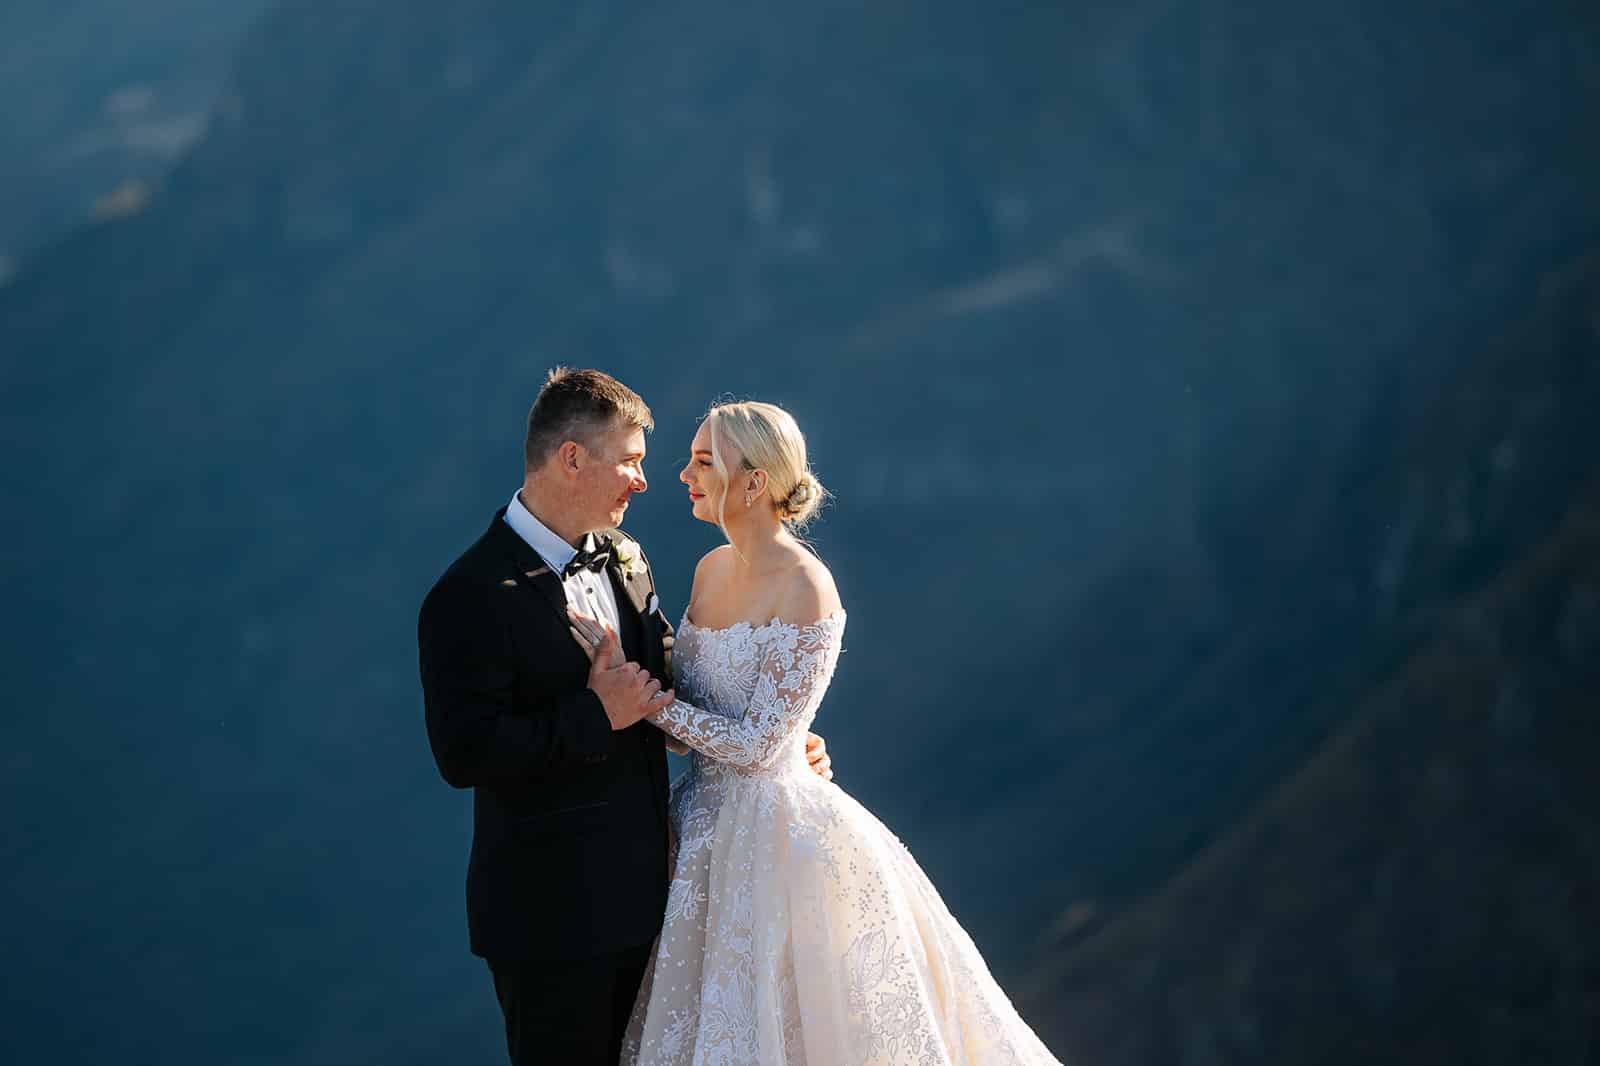 Heli Wedding on Round Hill and Bride wearing a Steven khalil wedding dress at Queenstown Wedding